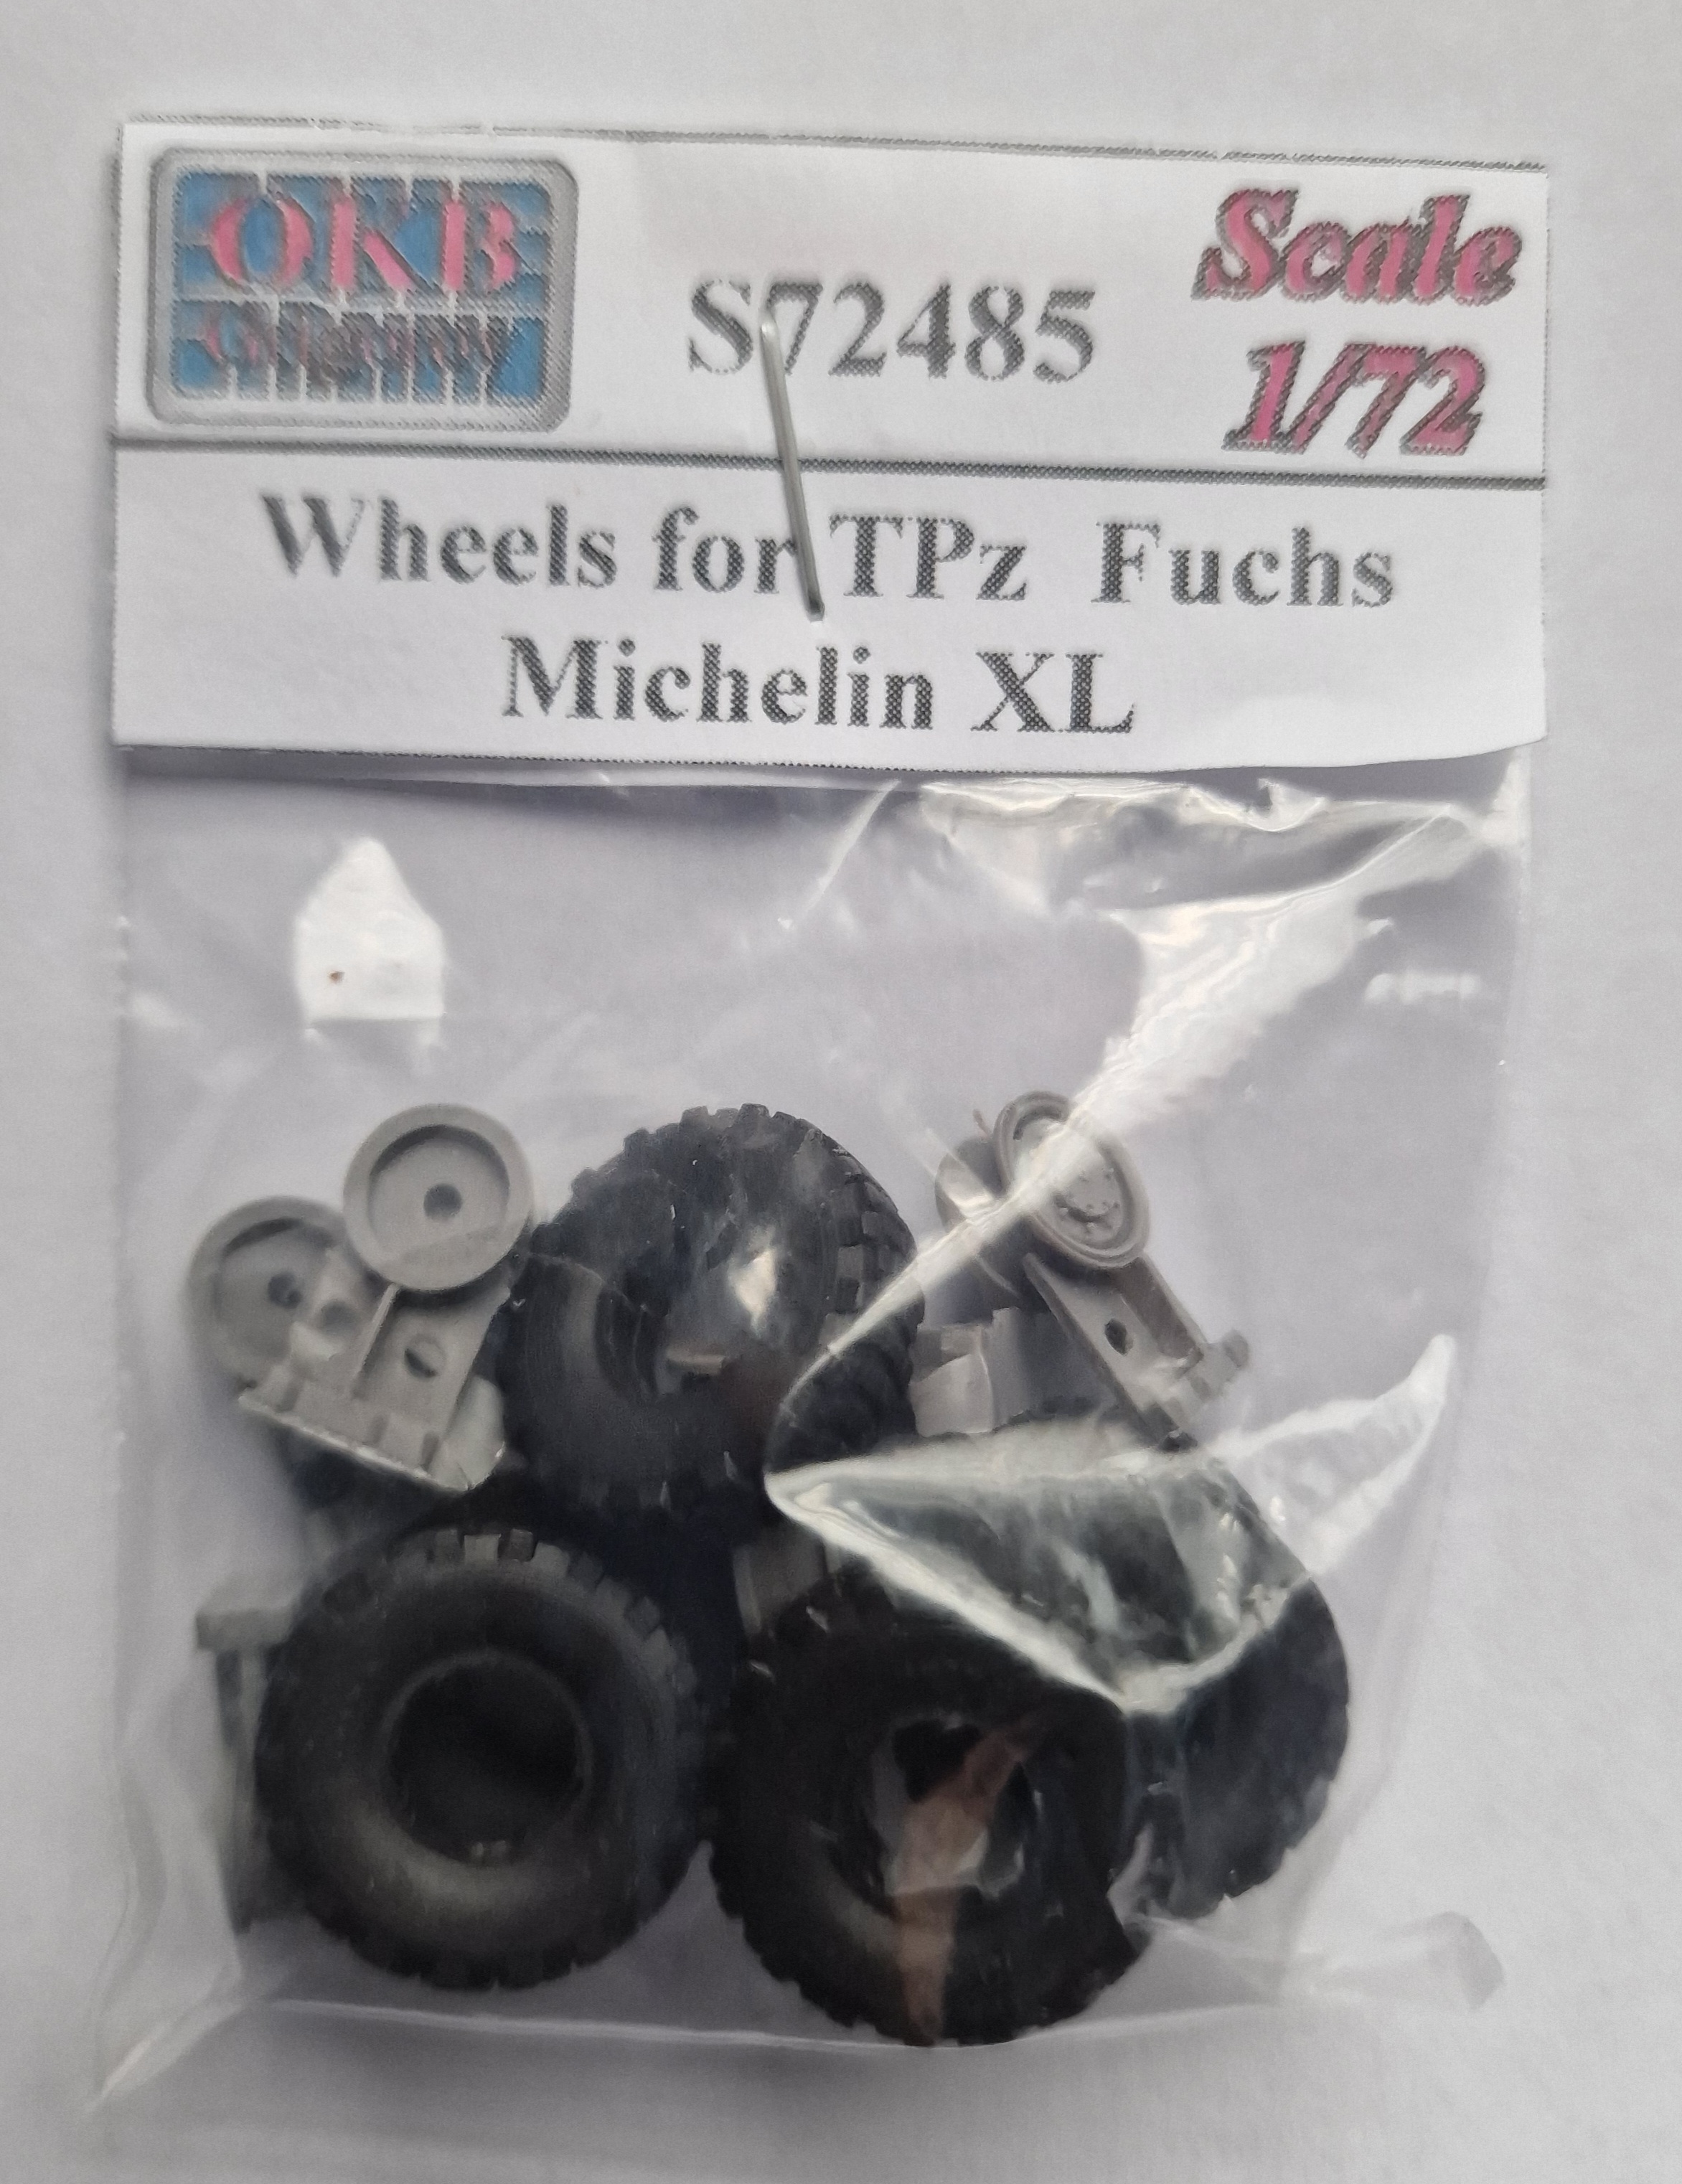 Tpz 1 Fuchs Michelin XL wheels